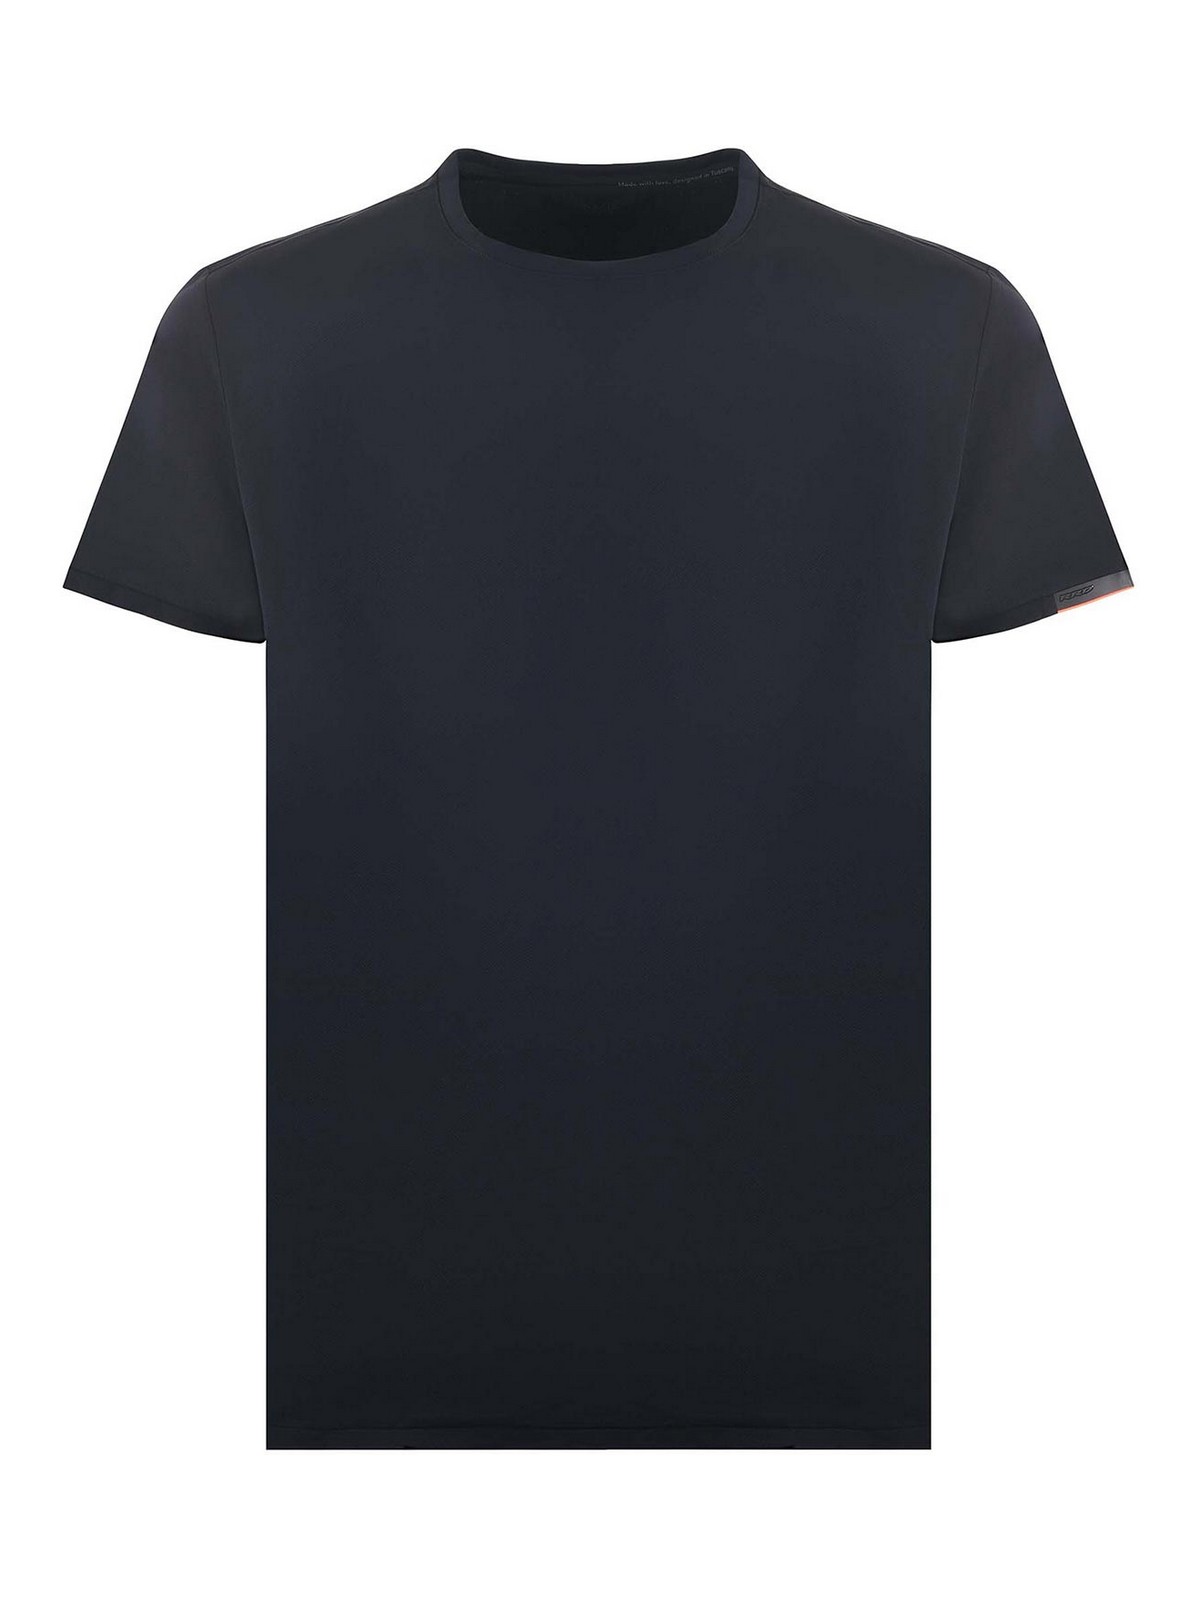 Rrd Roberto Ricci Designs T-shirt In Black